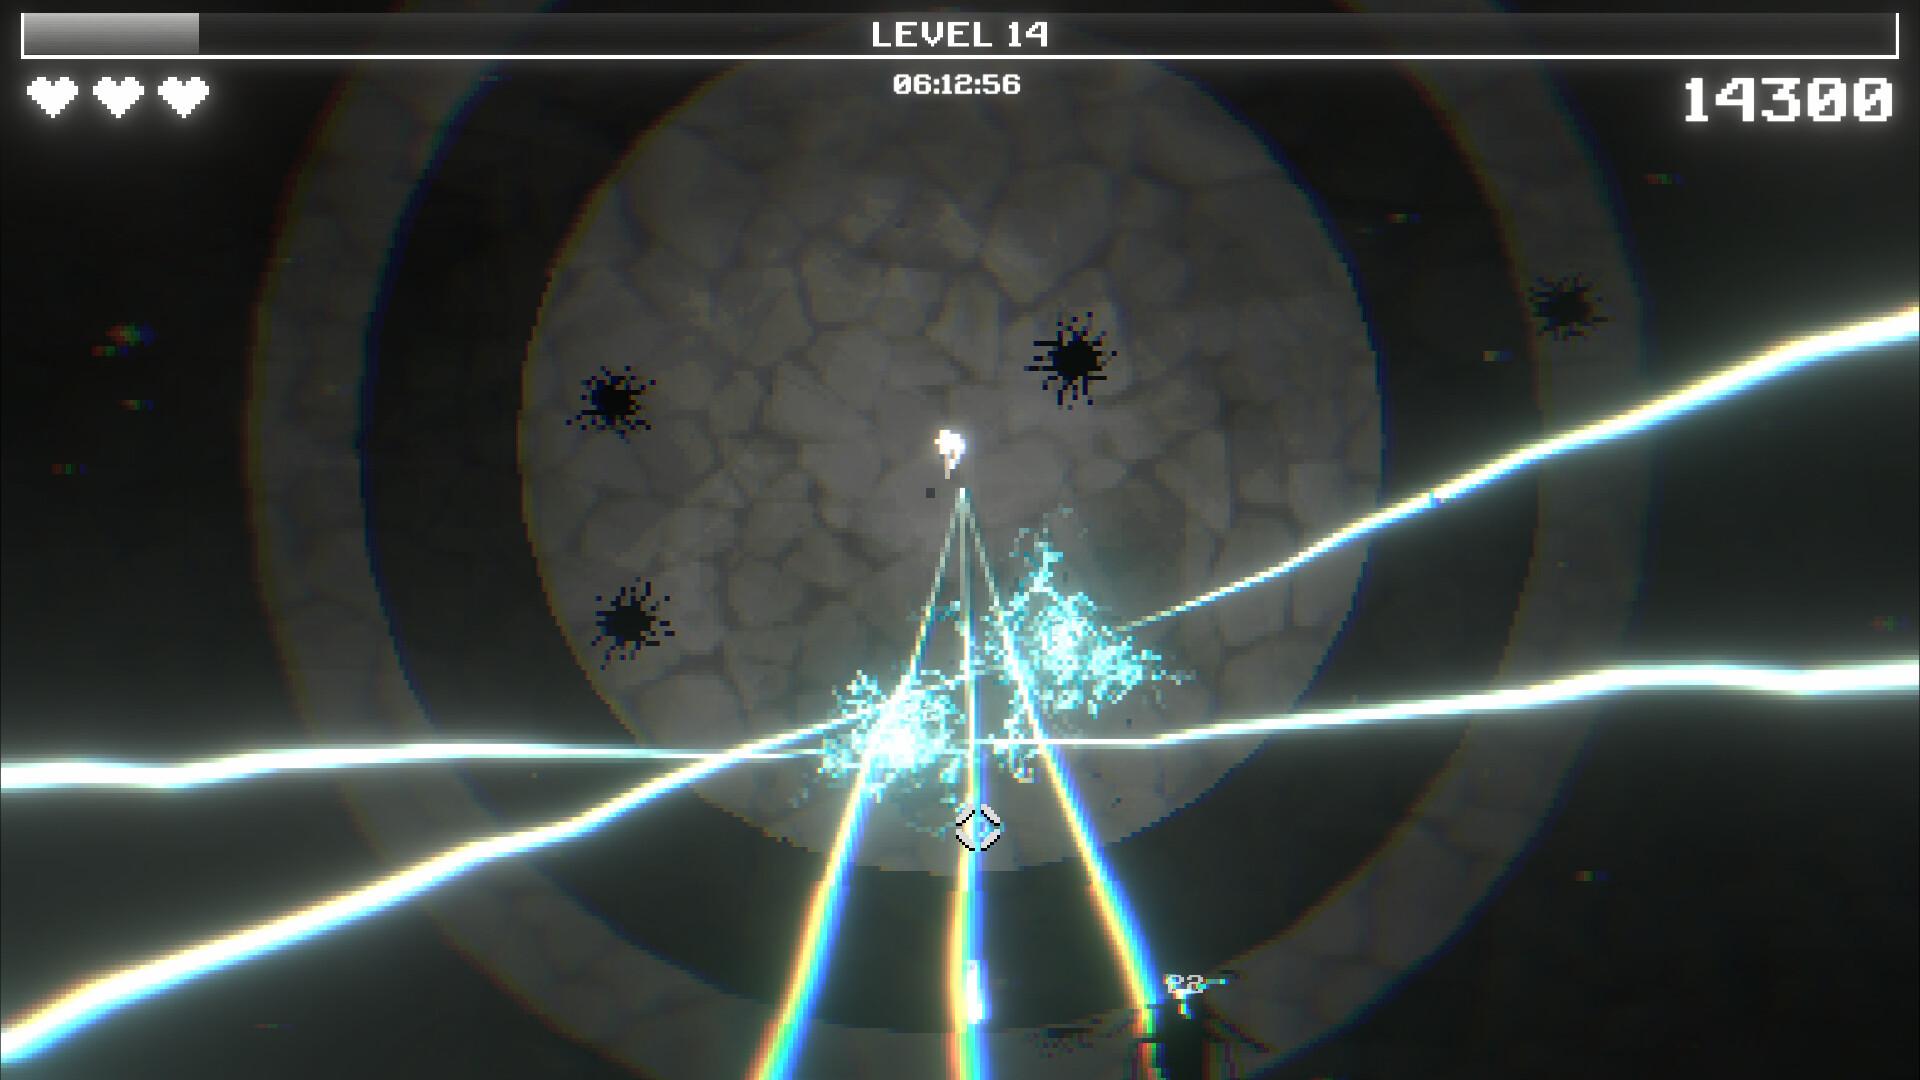 Screenshot №3 from game Disfigure